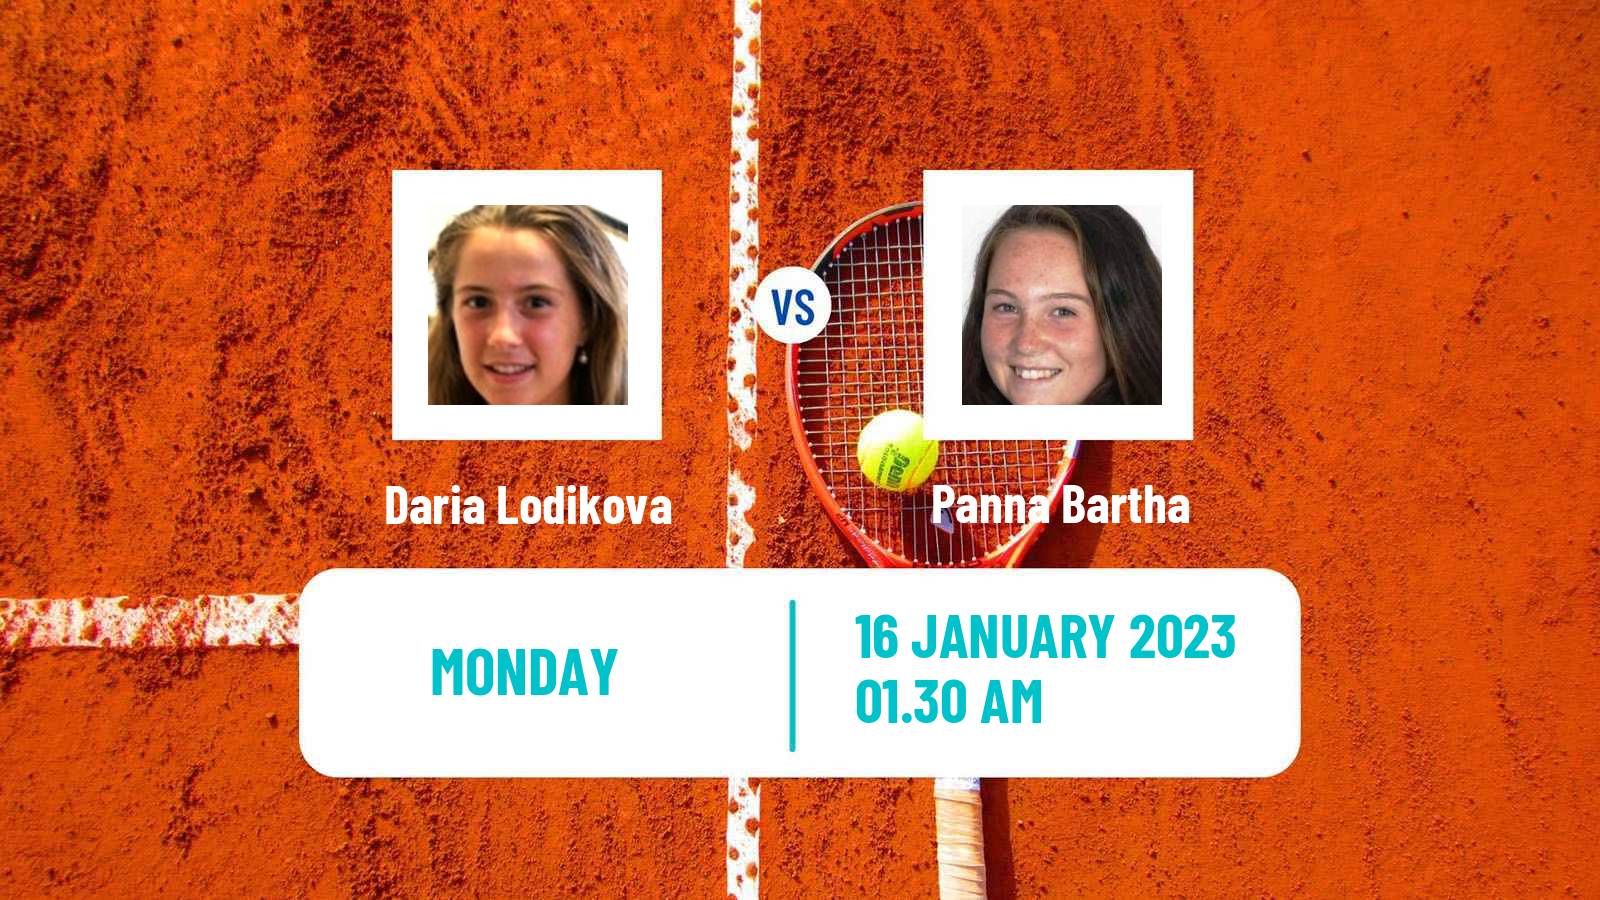 Tennis ITF Tournaments Daria Lodikova - Panna Bartha